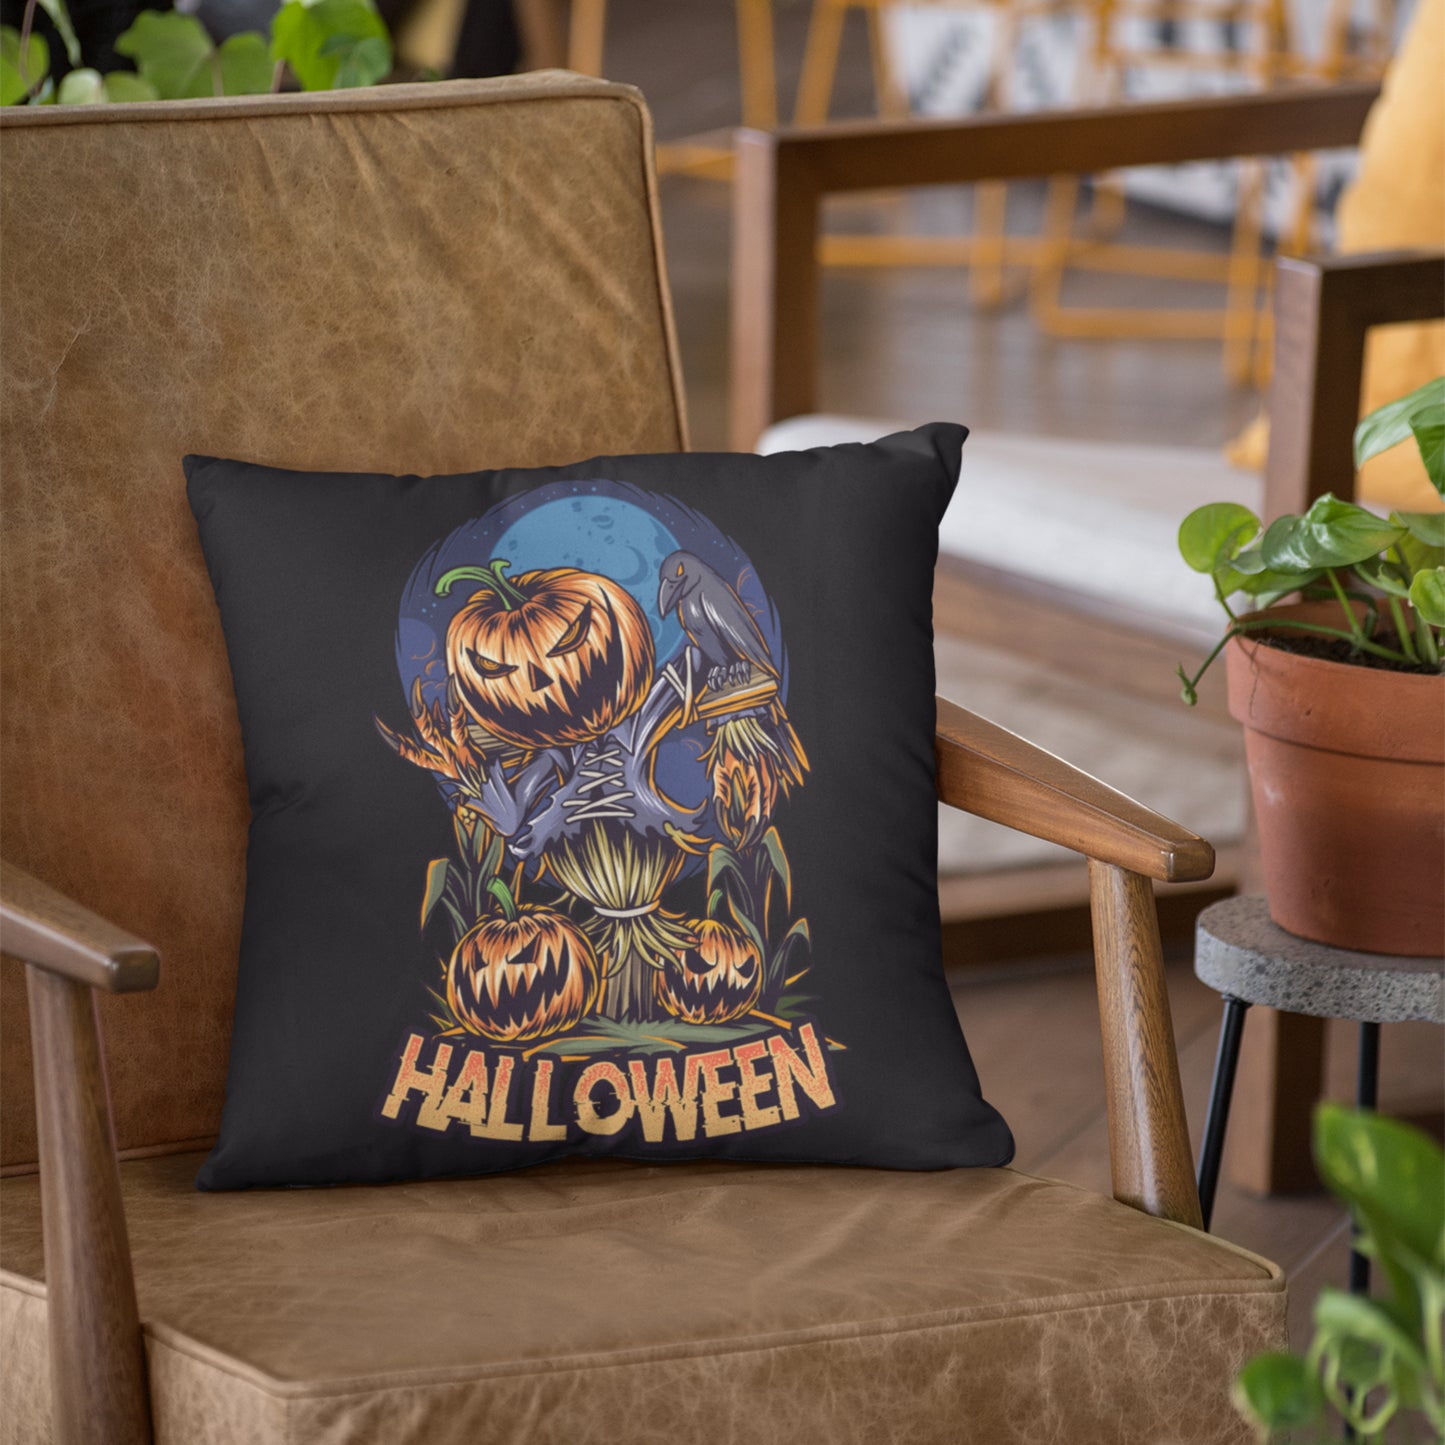 Halloween Home Decor Pillow Covers, Halloween Season Cushion Covers by Homeezone